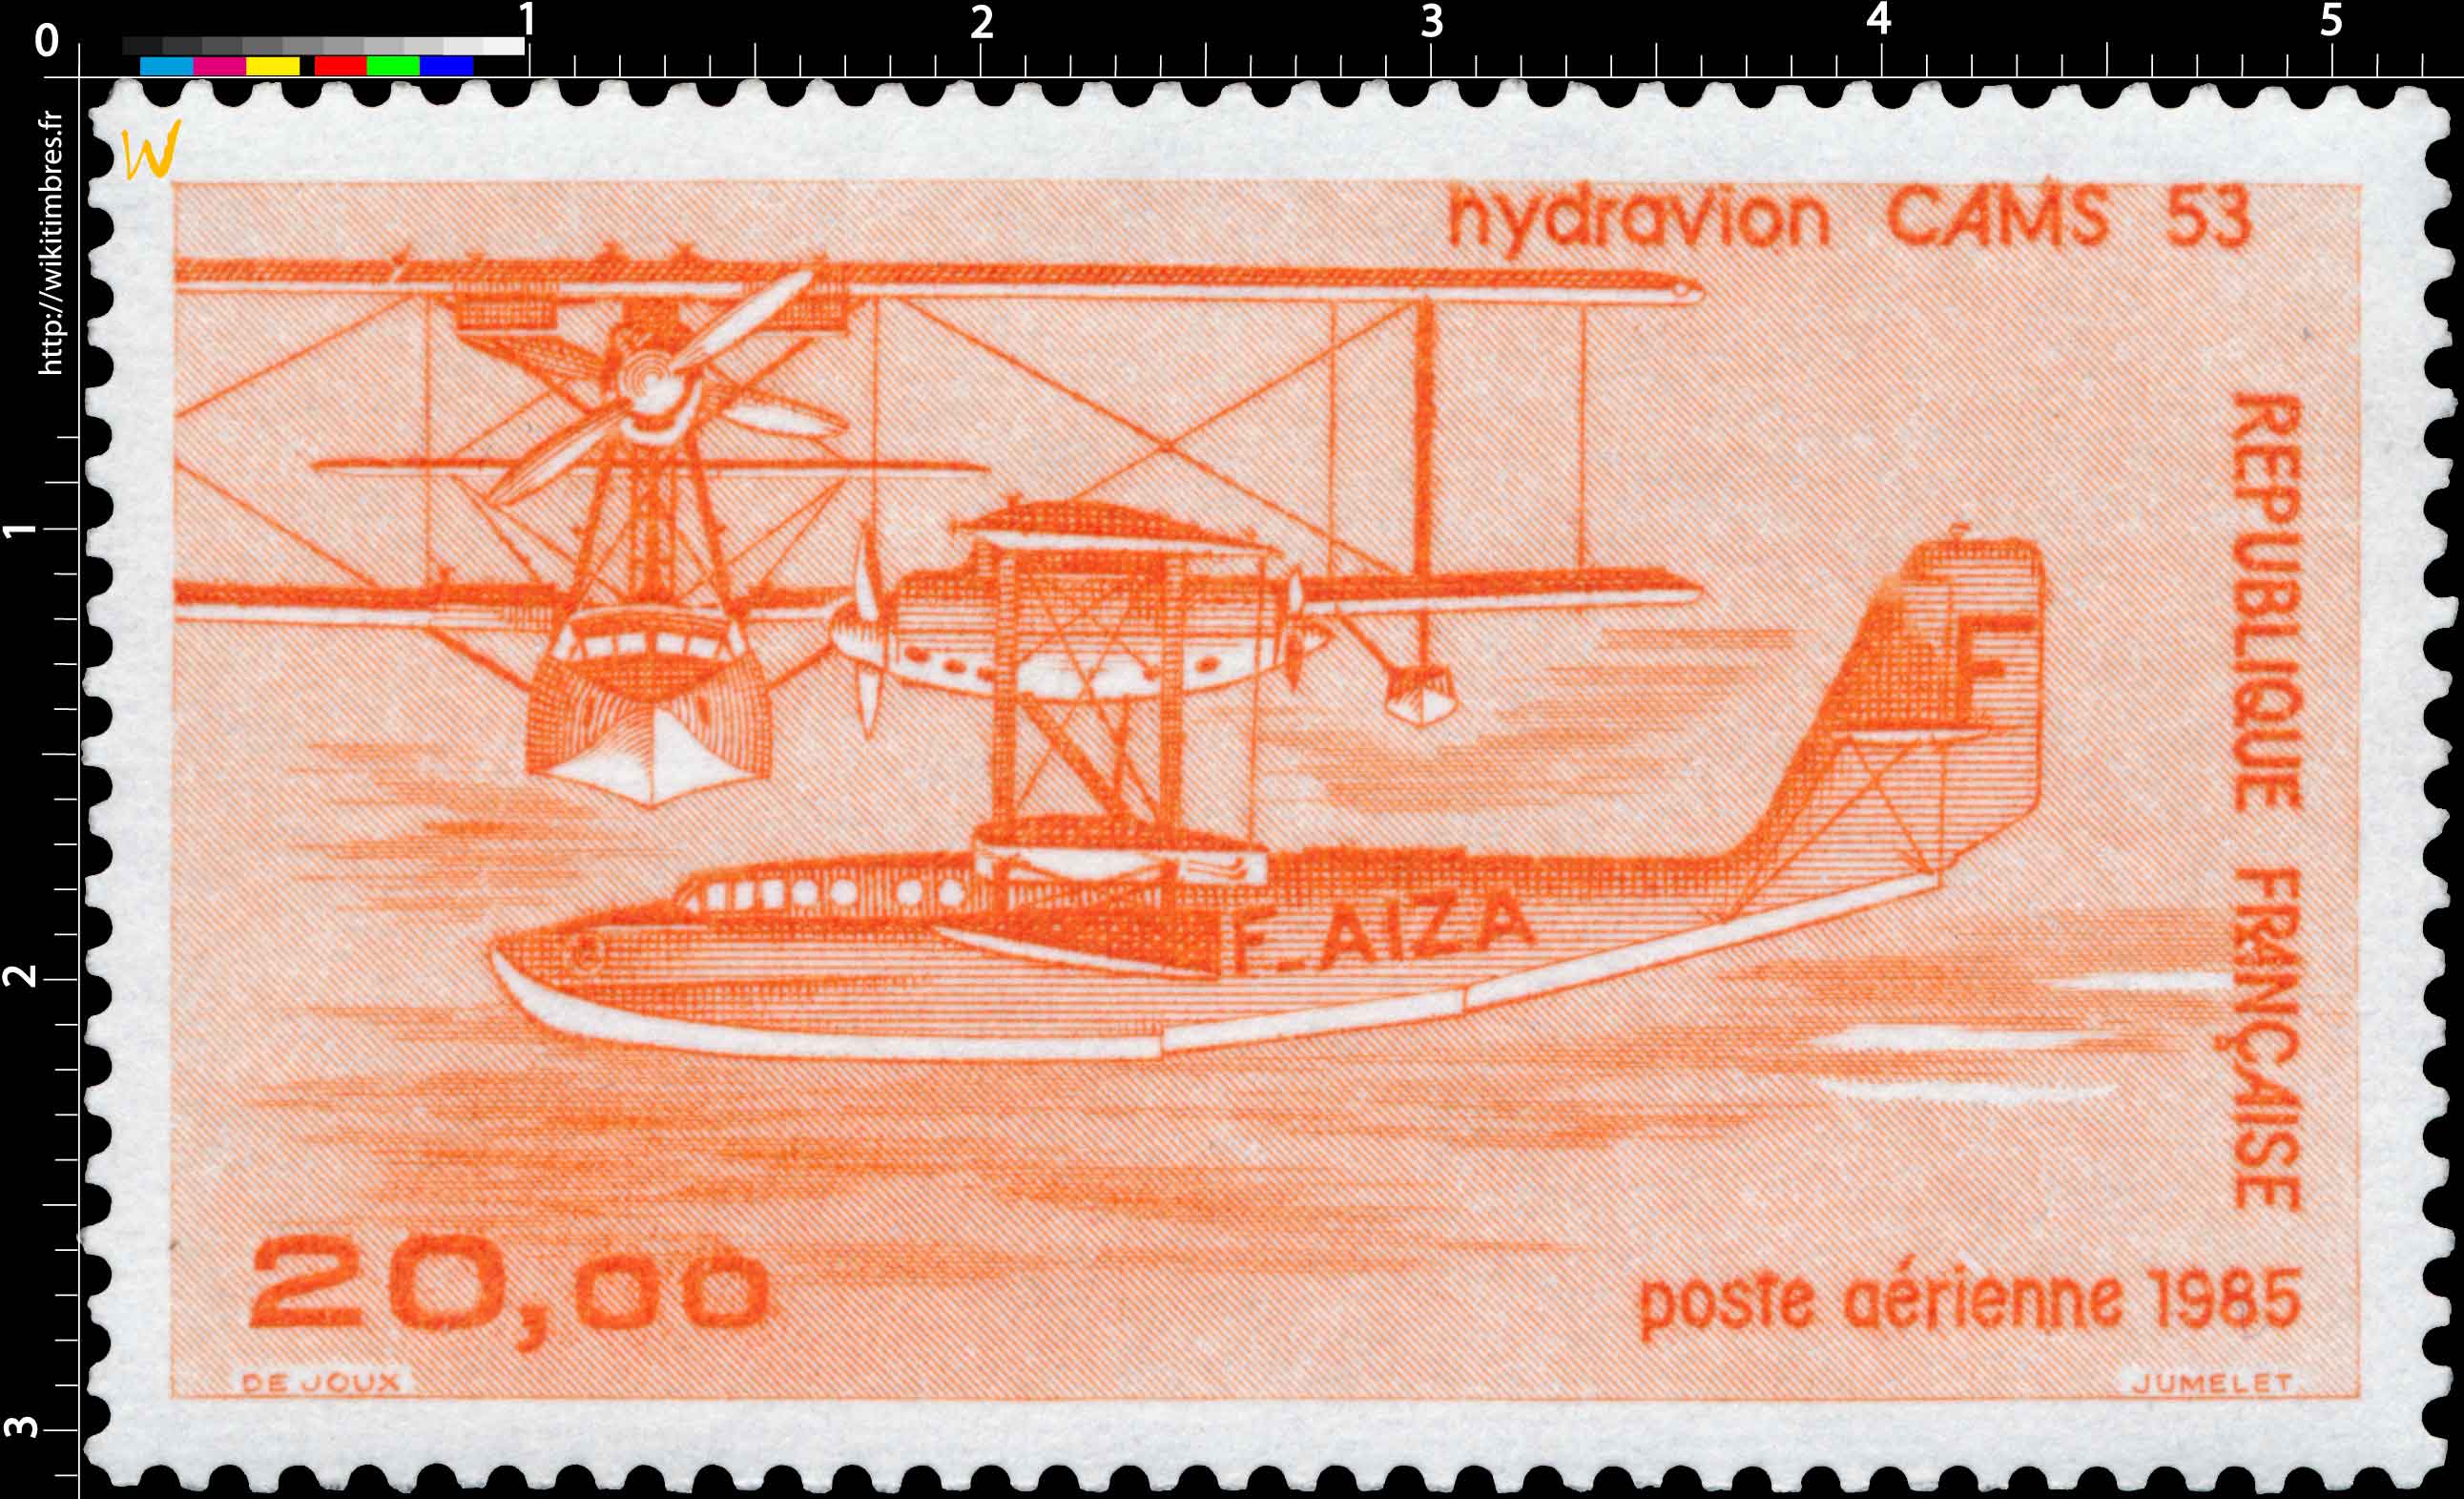 1985 Hydravion CAMS 53